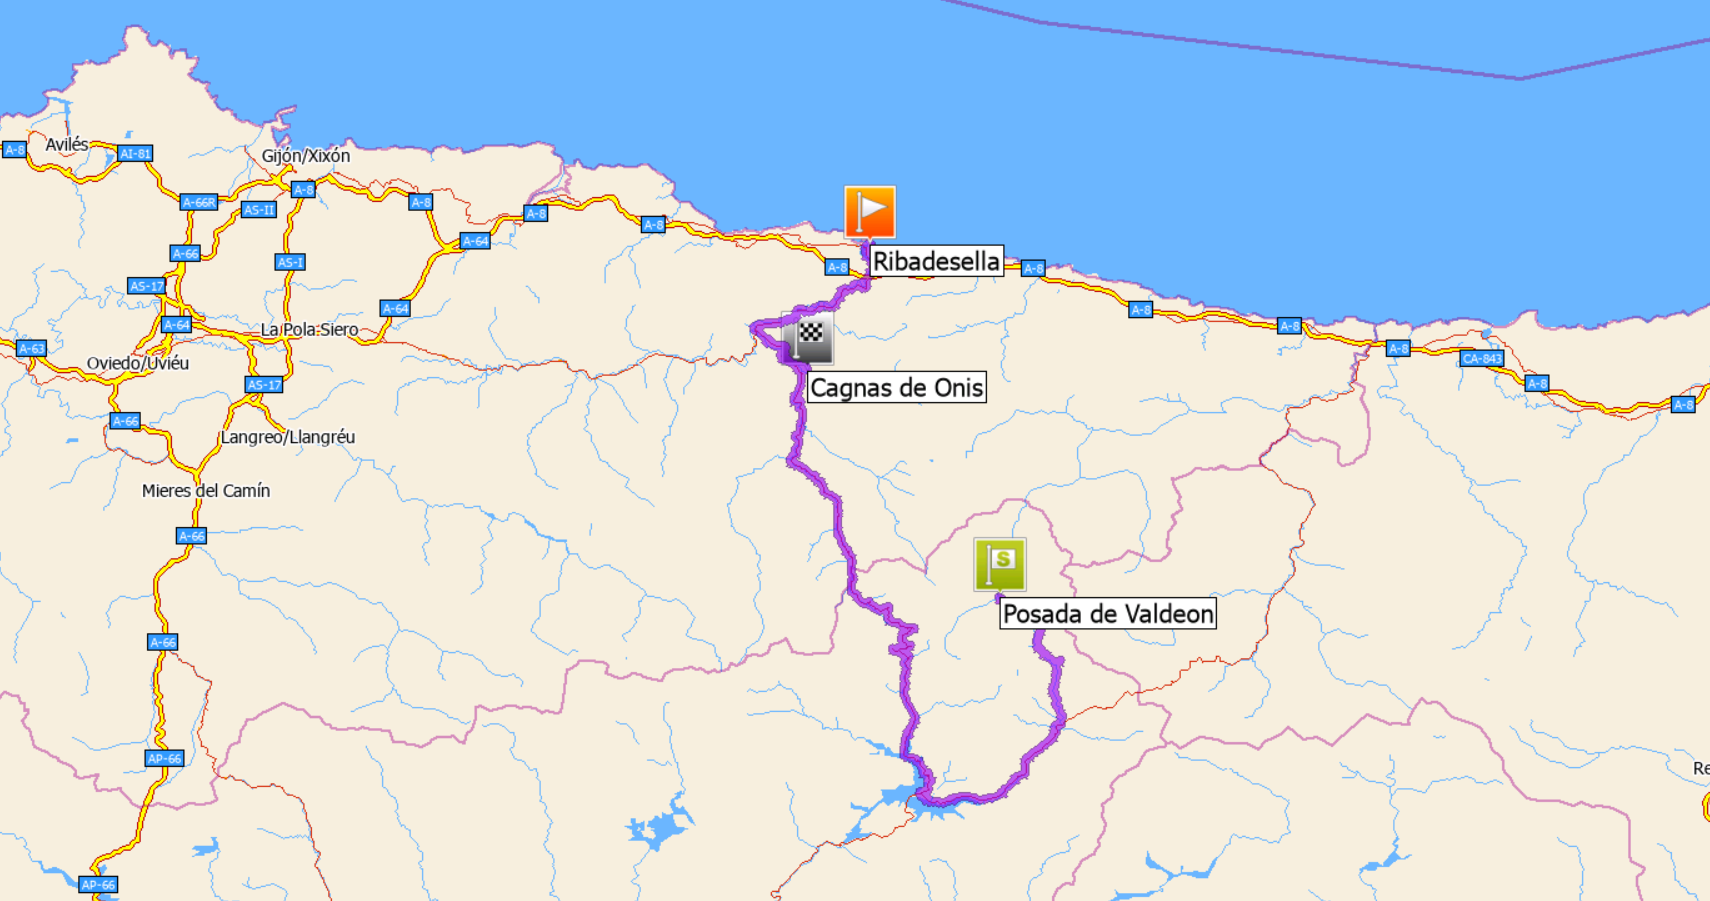 Posada-de-valdeon-cagnas-de-onis-23-11-2020-ujeto-158-km